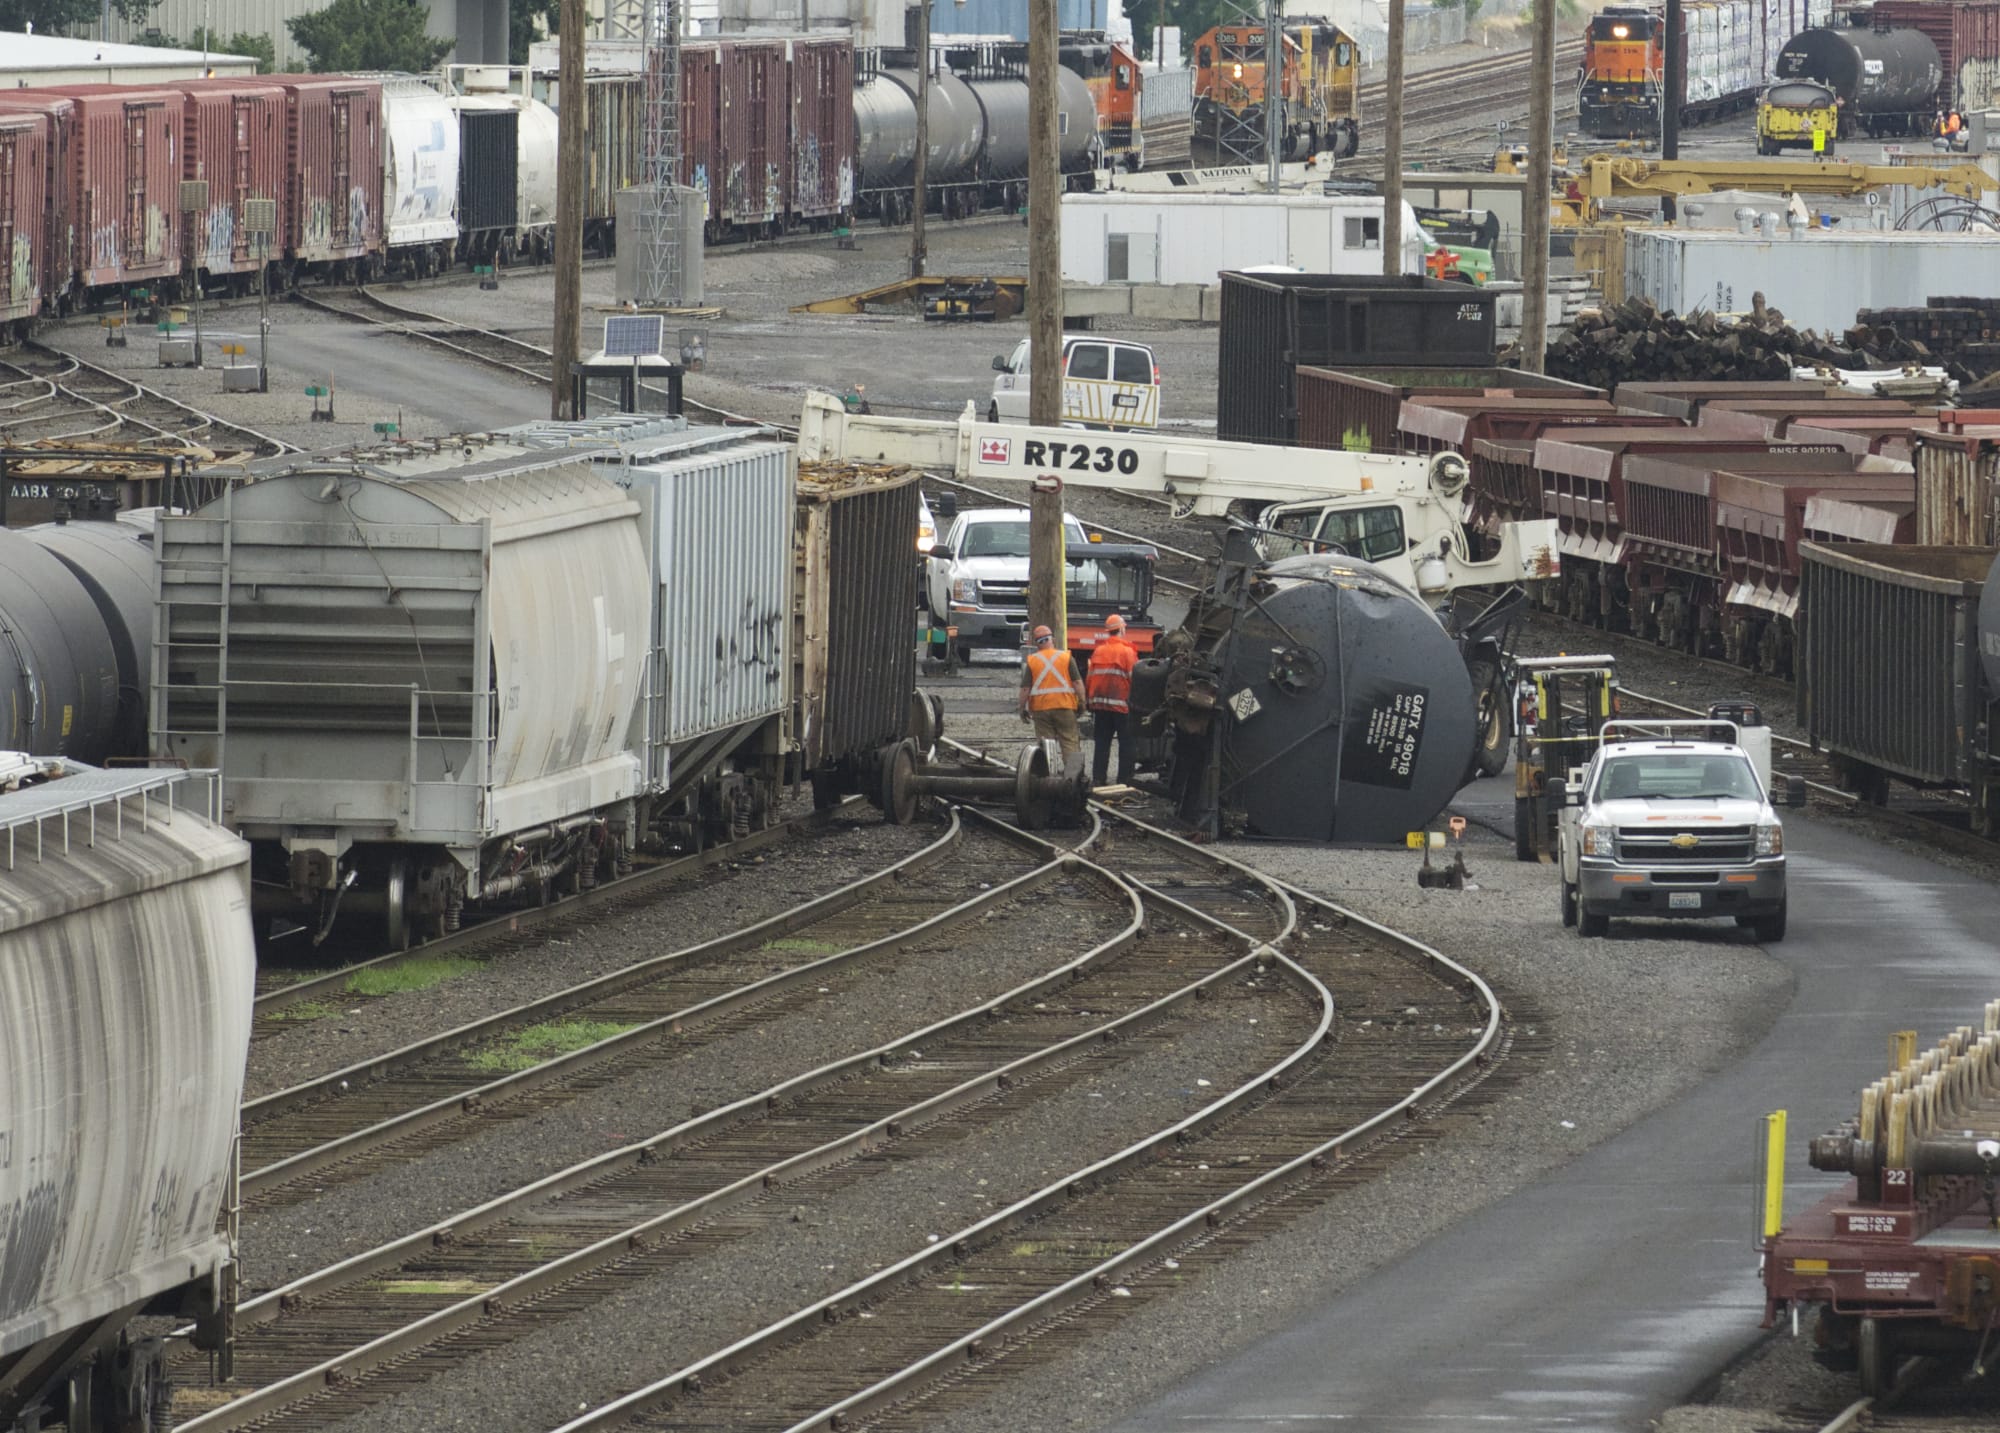 Crews work to flip a derailed tank car containing liquid asphalt in the BNSF Railway Vancouver yard near the Fourth Plain Boulevard overpass on Friday.